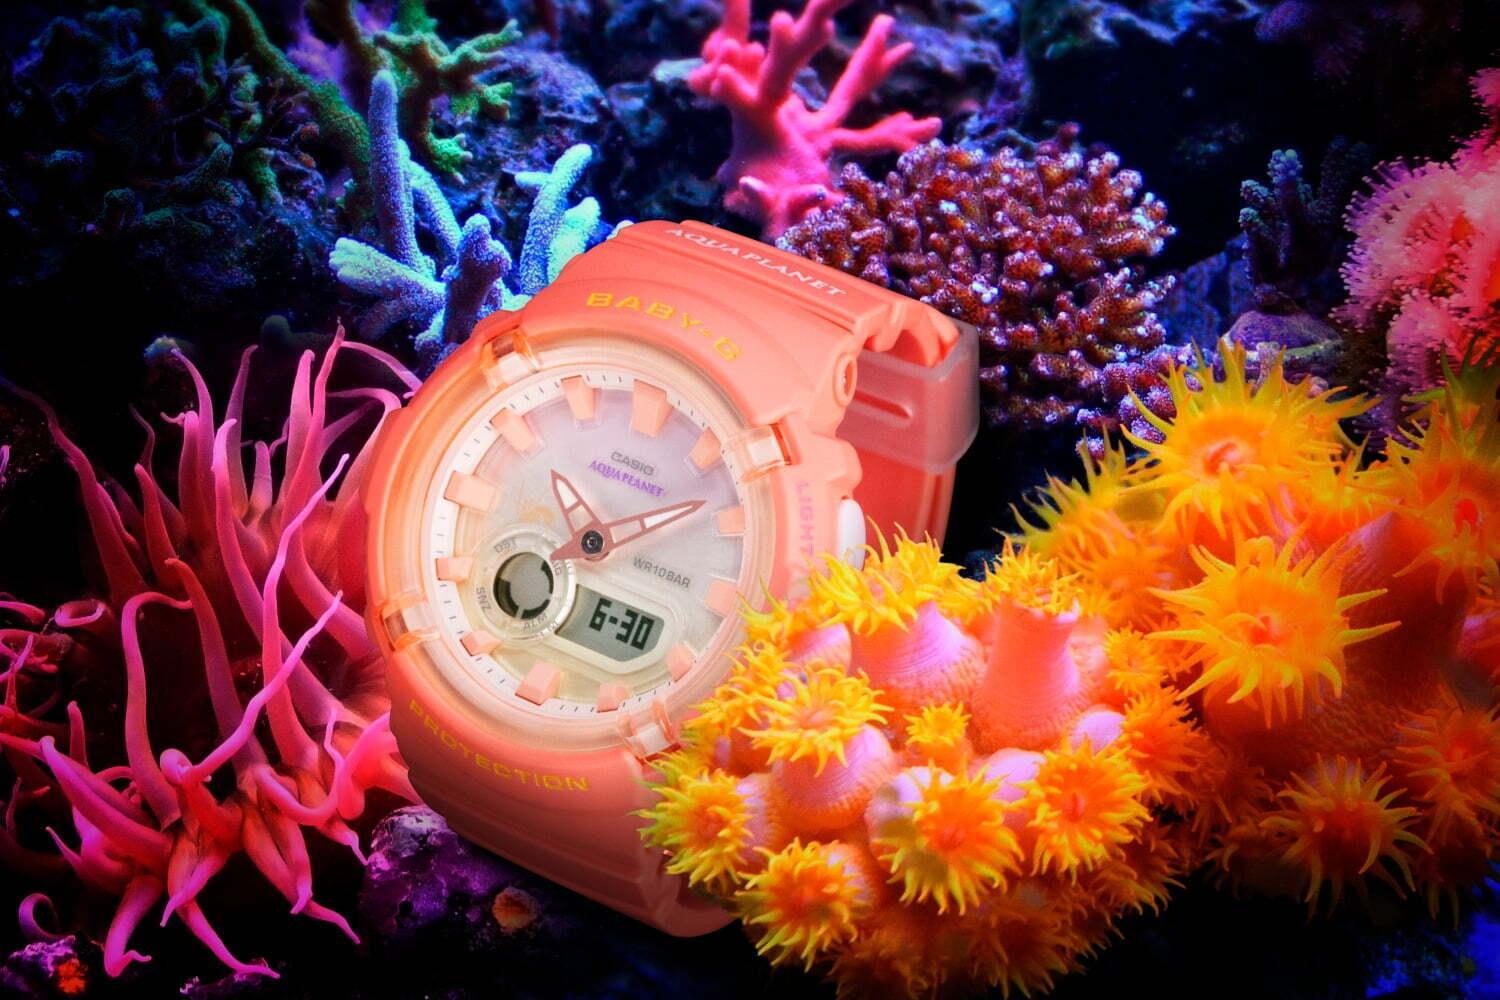 BABY-G“サンゴ”モチーフの新作腕時計、コーラルオレンジのケース＆グラデーション文字板 